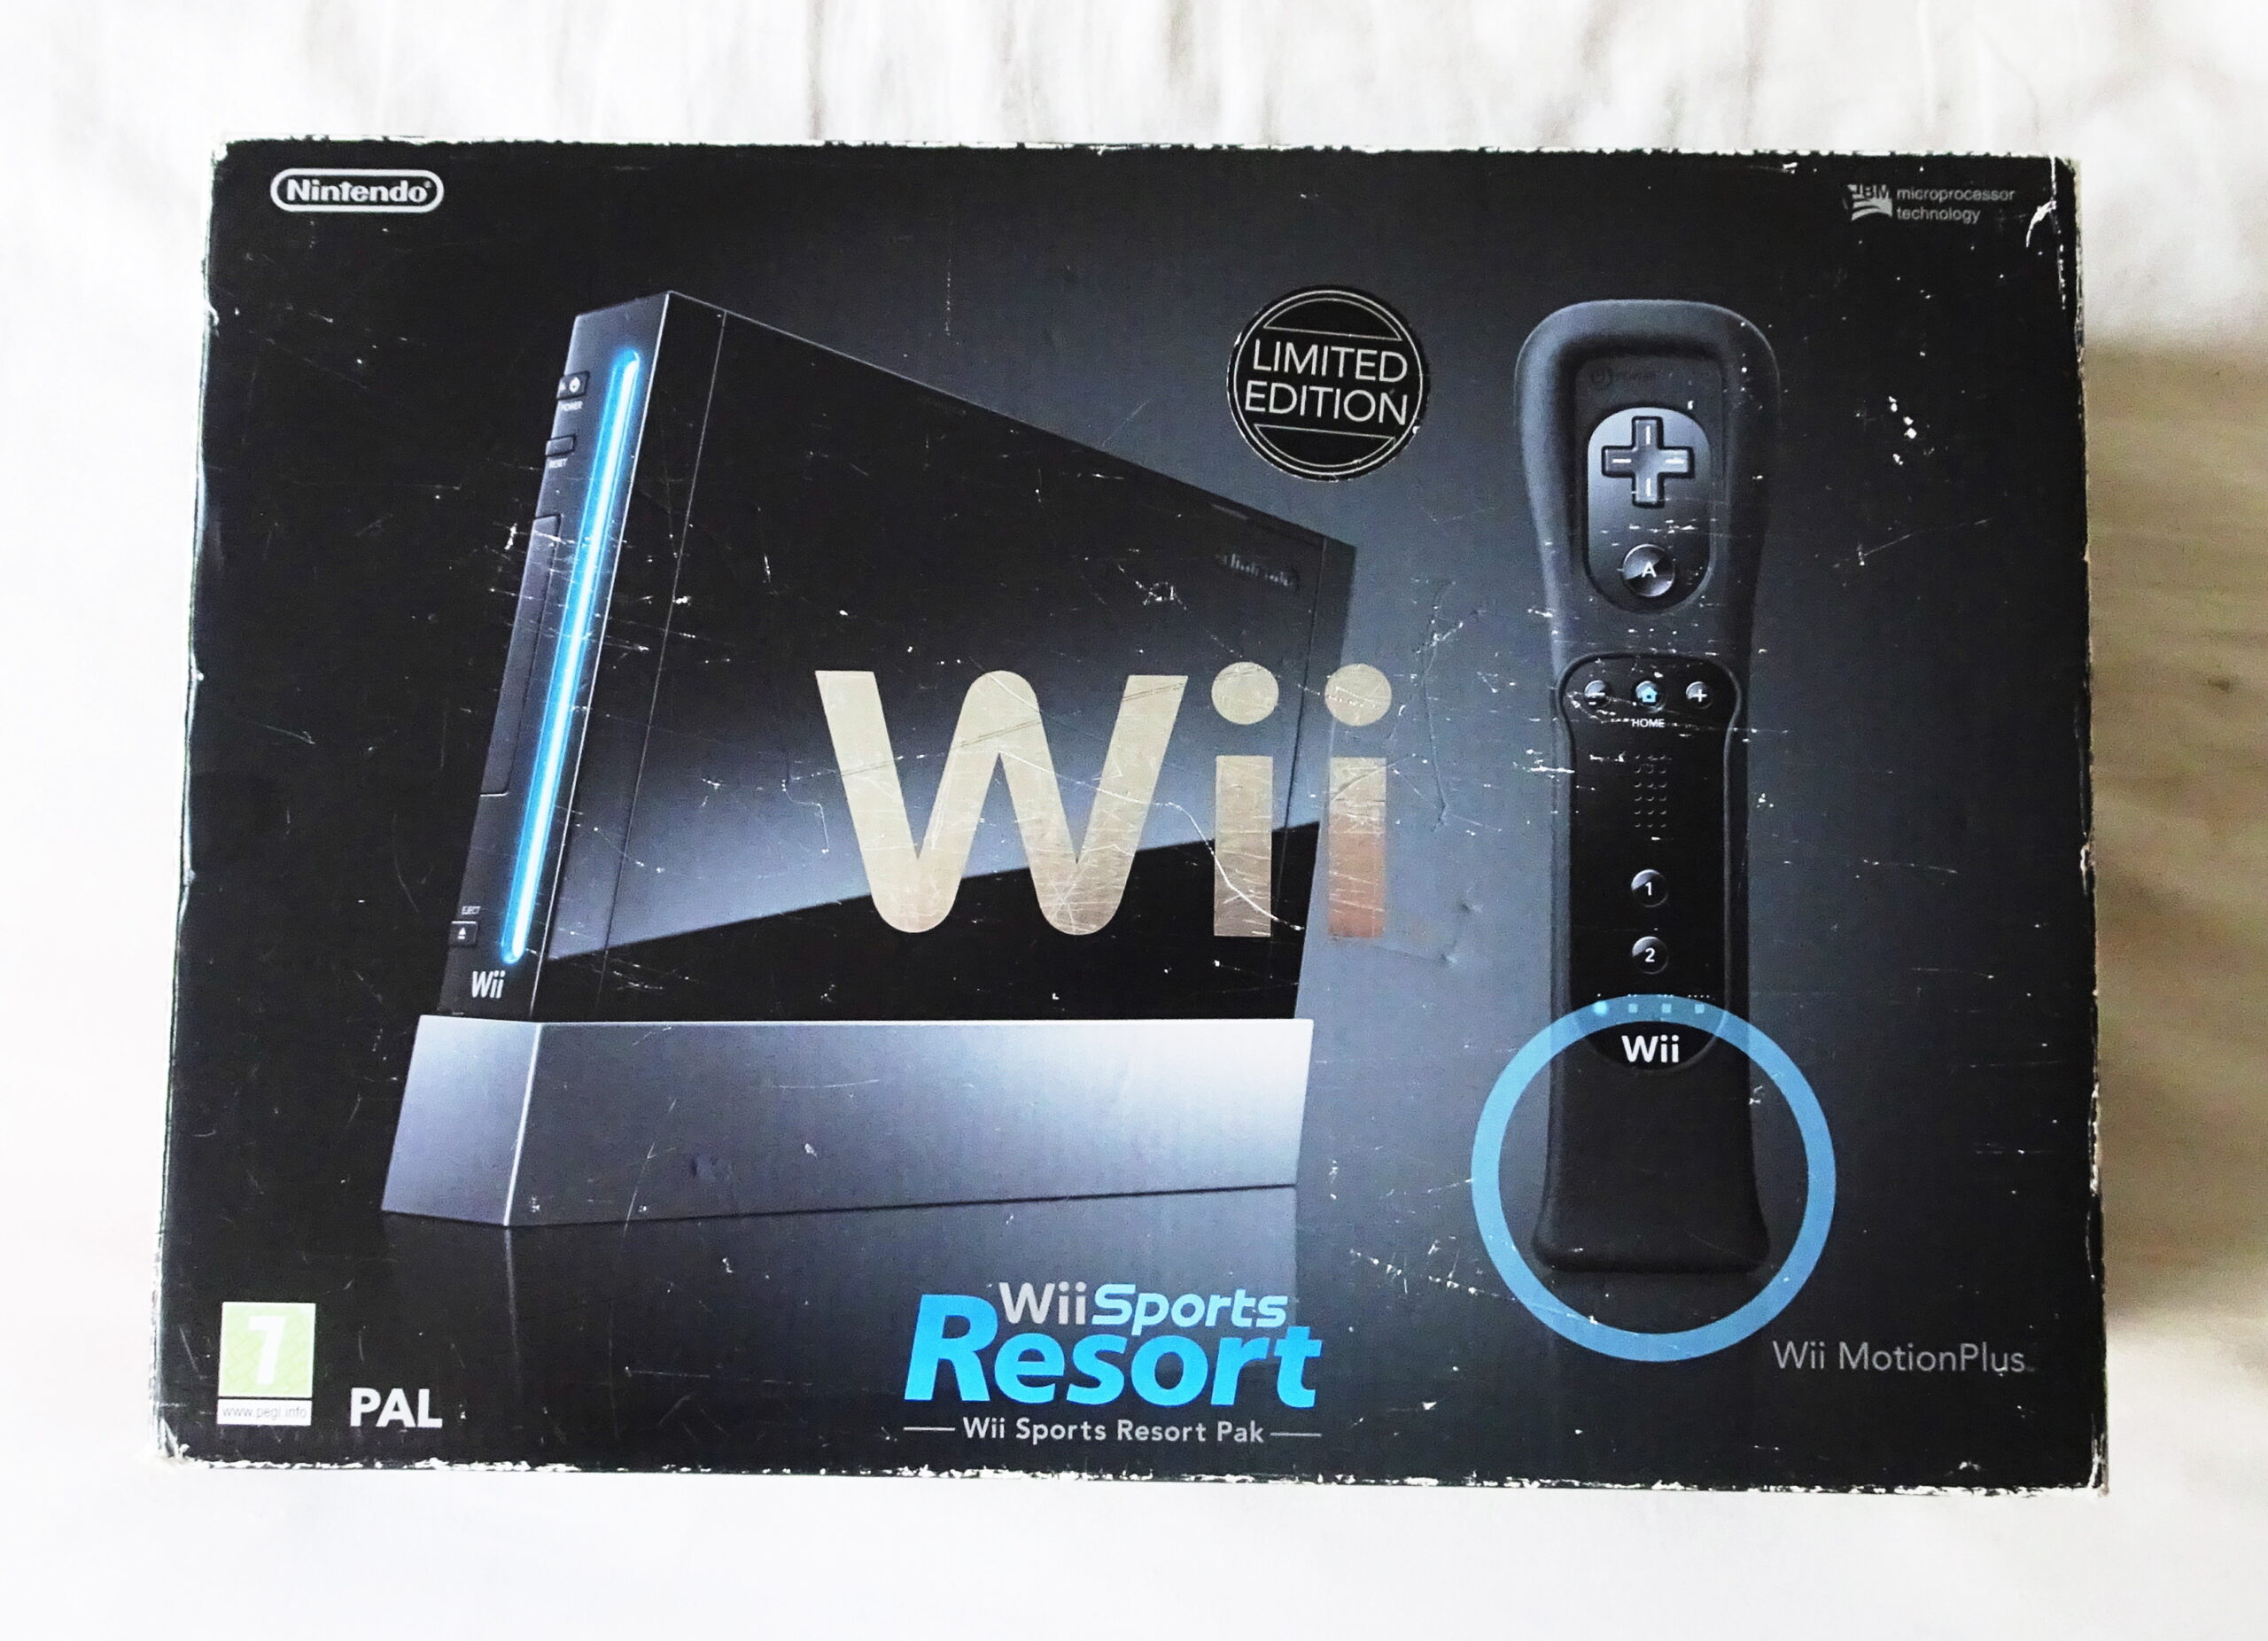 Nintendo Wii Konsol Med Wii Sports + Wii Sports Resort Komplet i Kasse (Limited Edition)